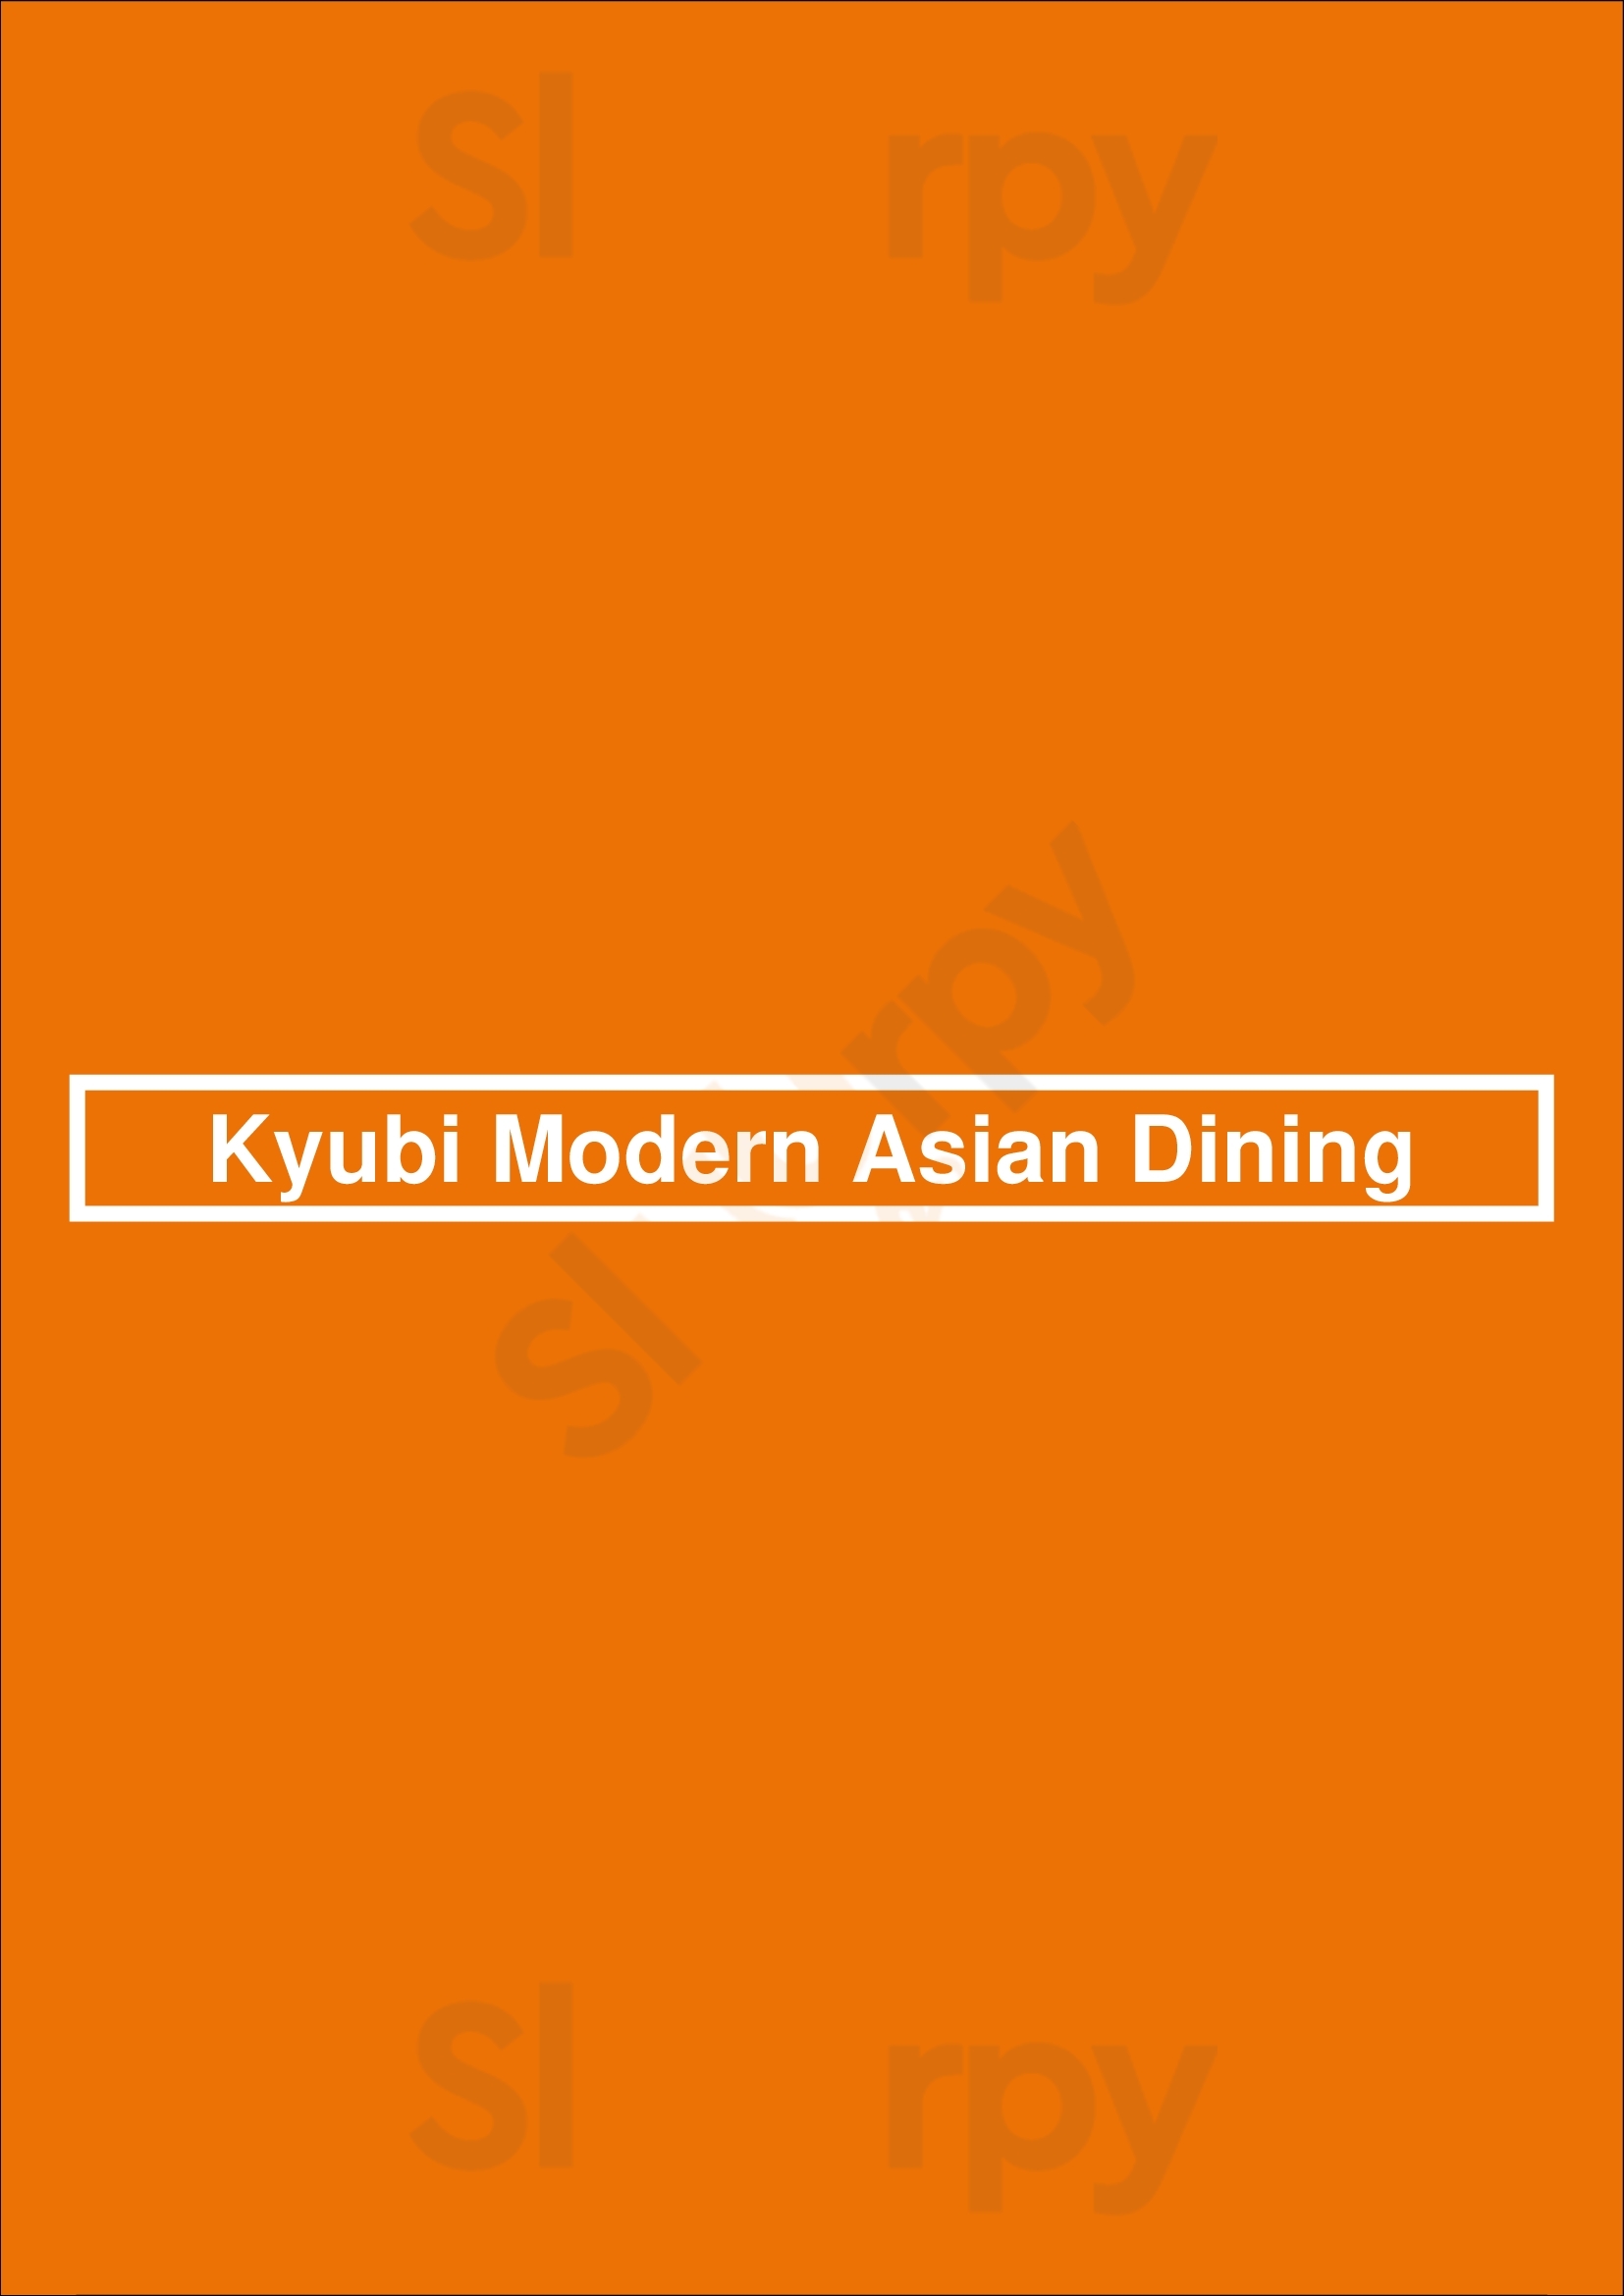 Kyubi Modern Asian Dining Campbelltown Menu - 1